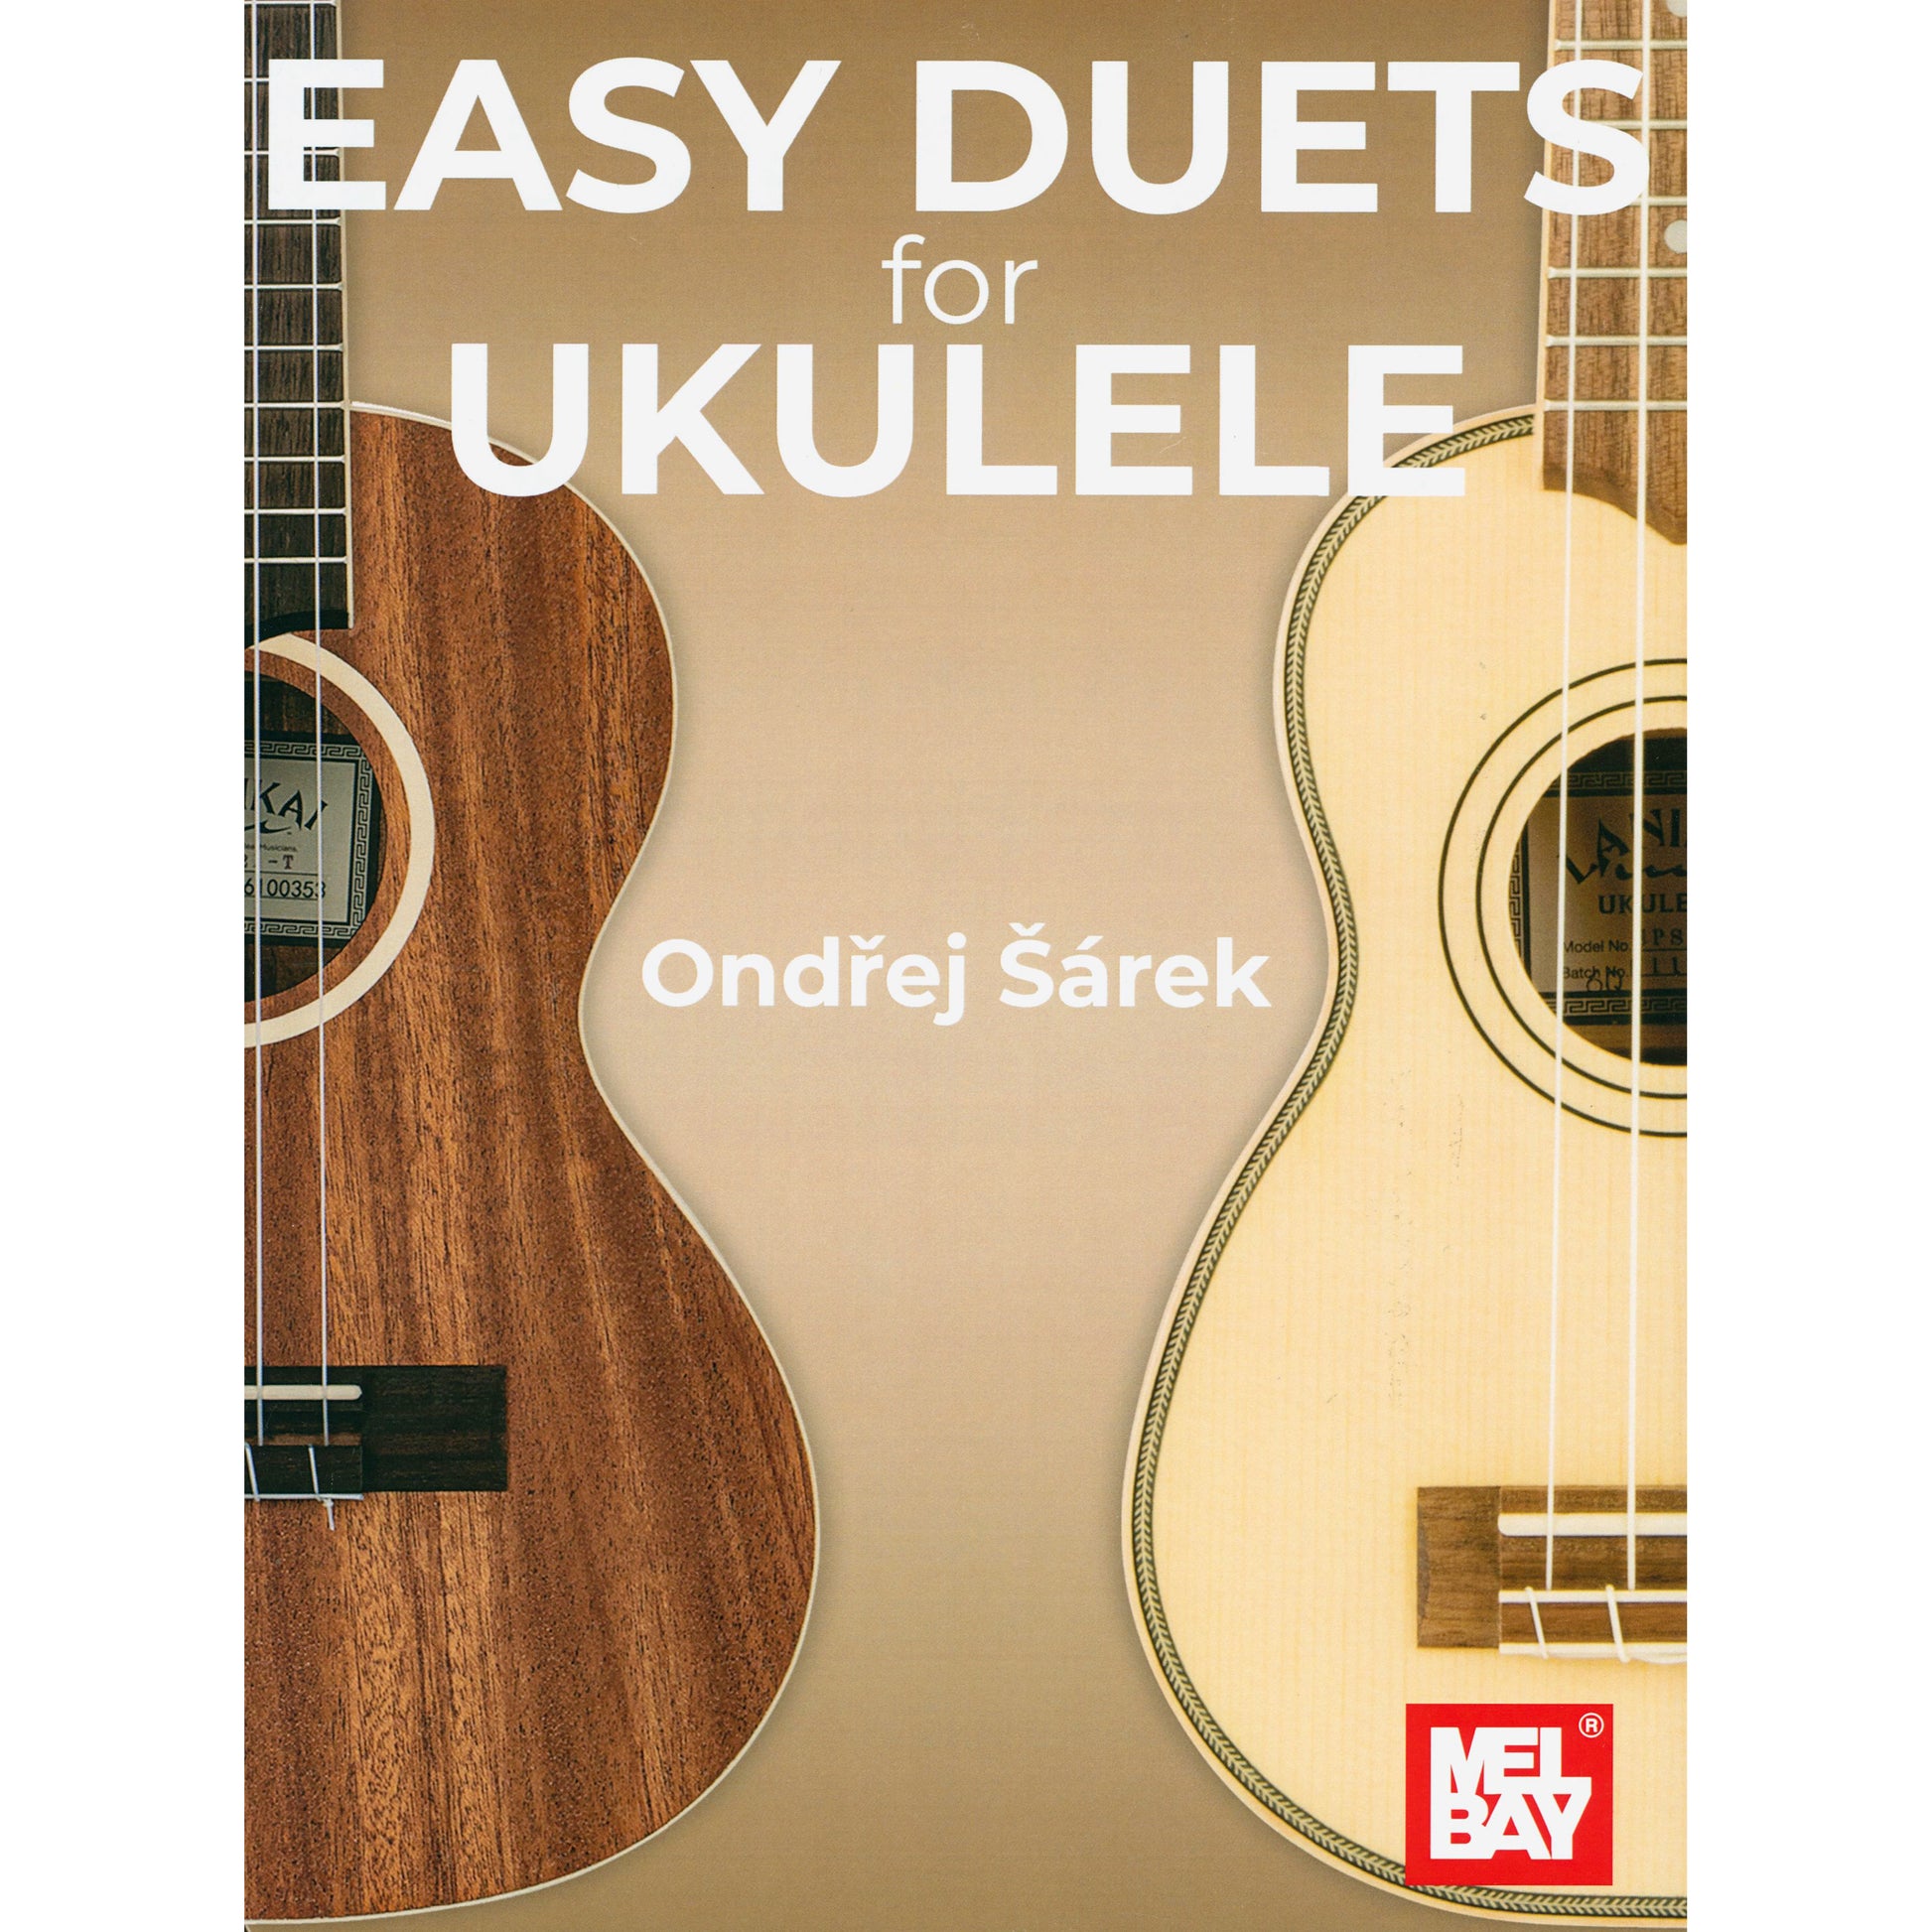 Image 1 of Easy Duets for Ukulele - SKU# 02-30955 : Product Type Media : Elderly Instruments